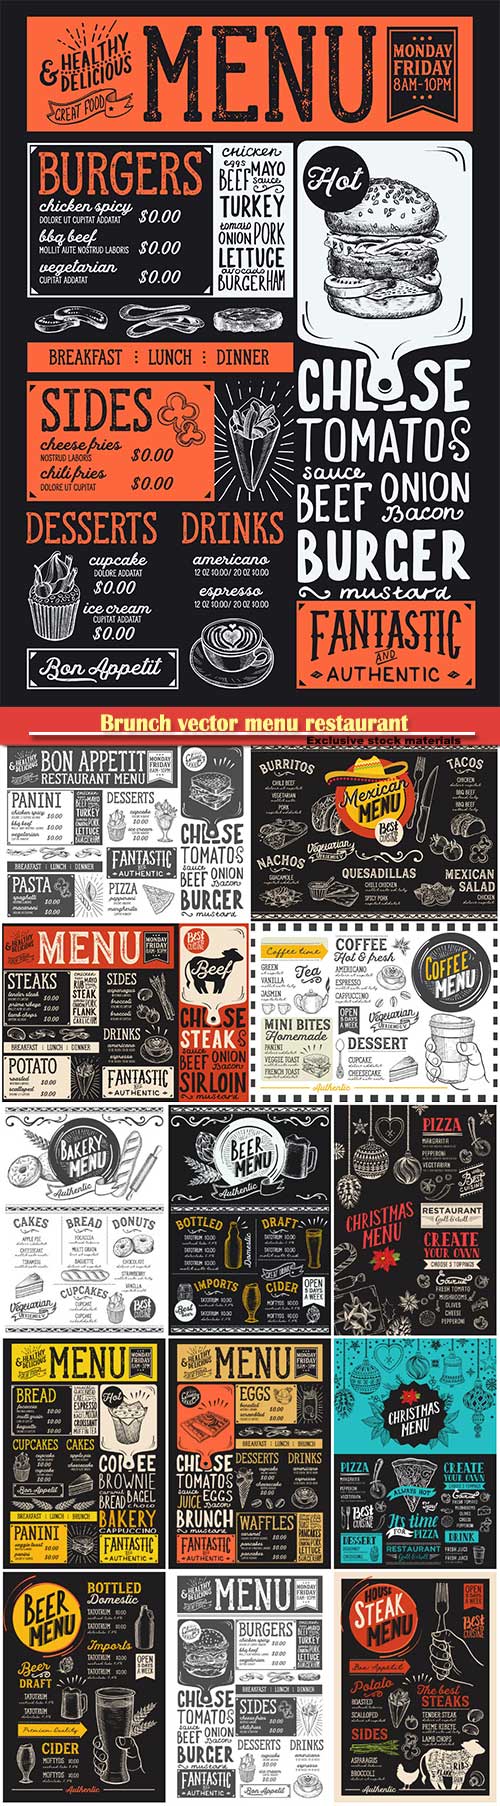 Brunch vector menu restaurant, food template